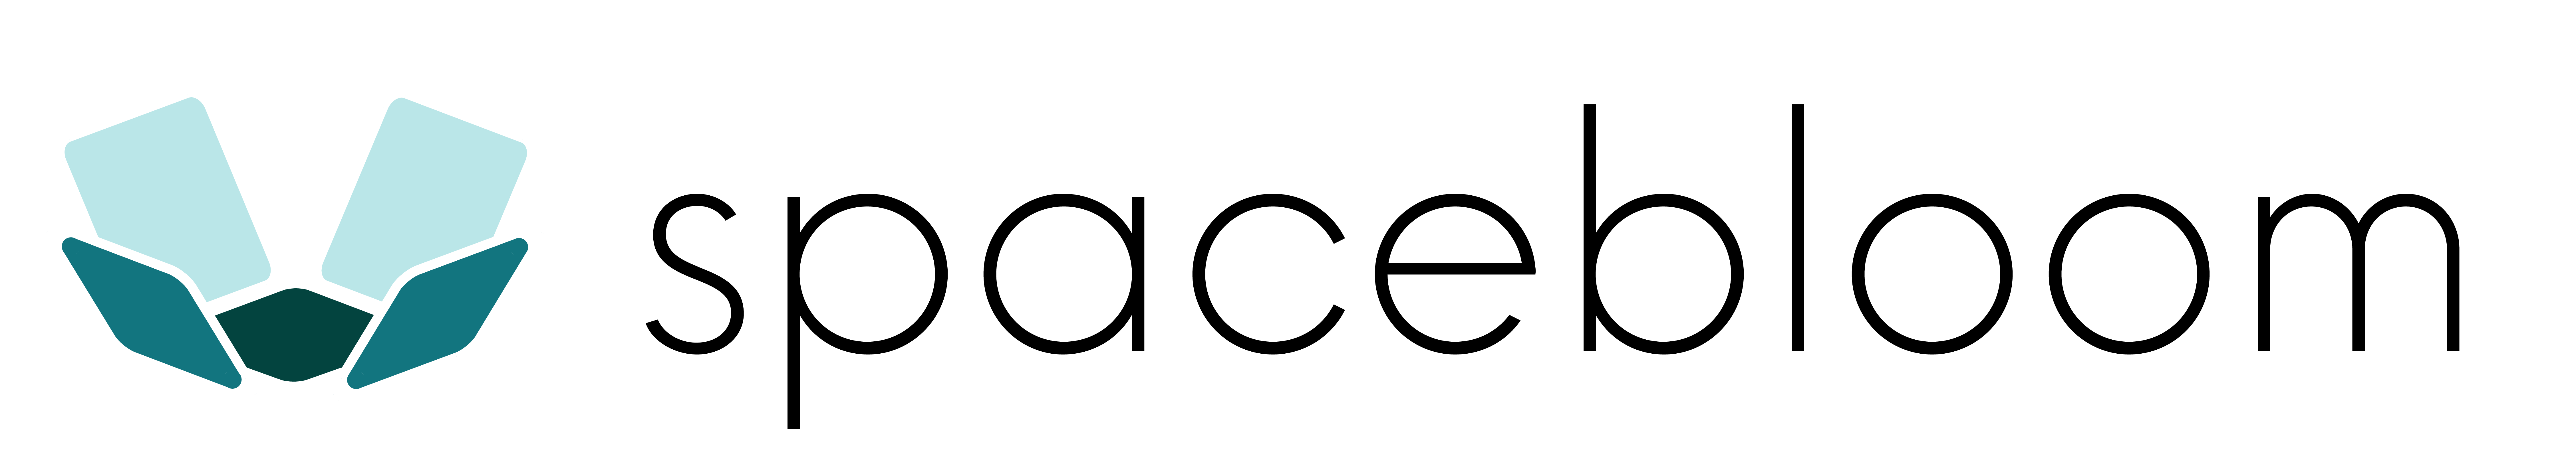 logo spacebloom final-01